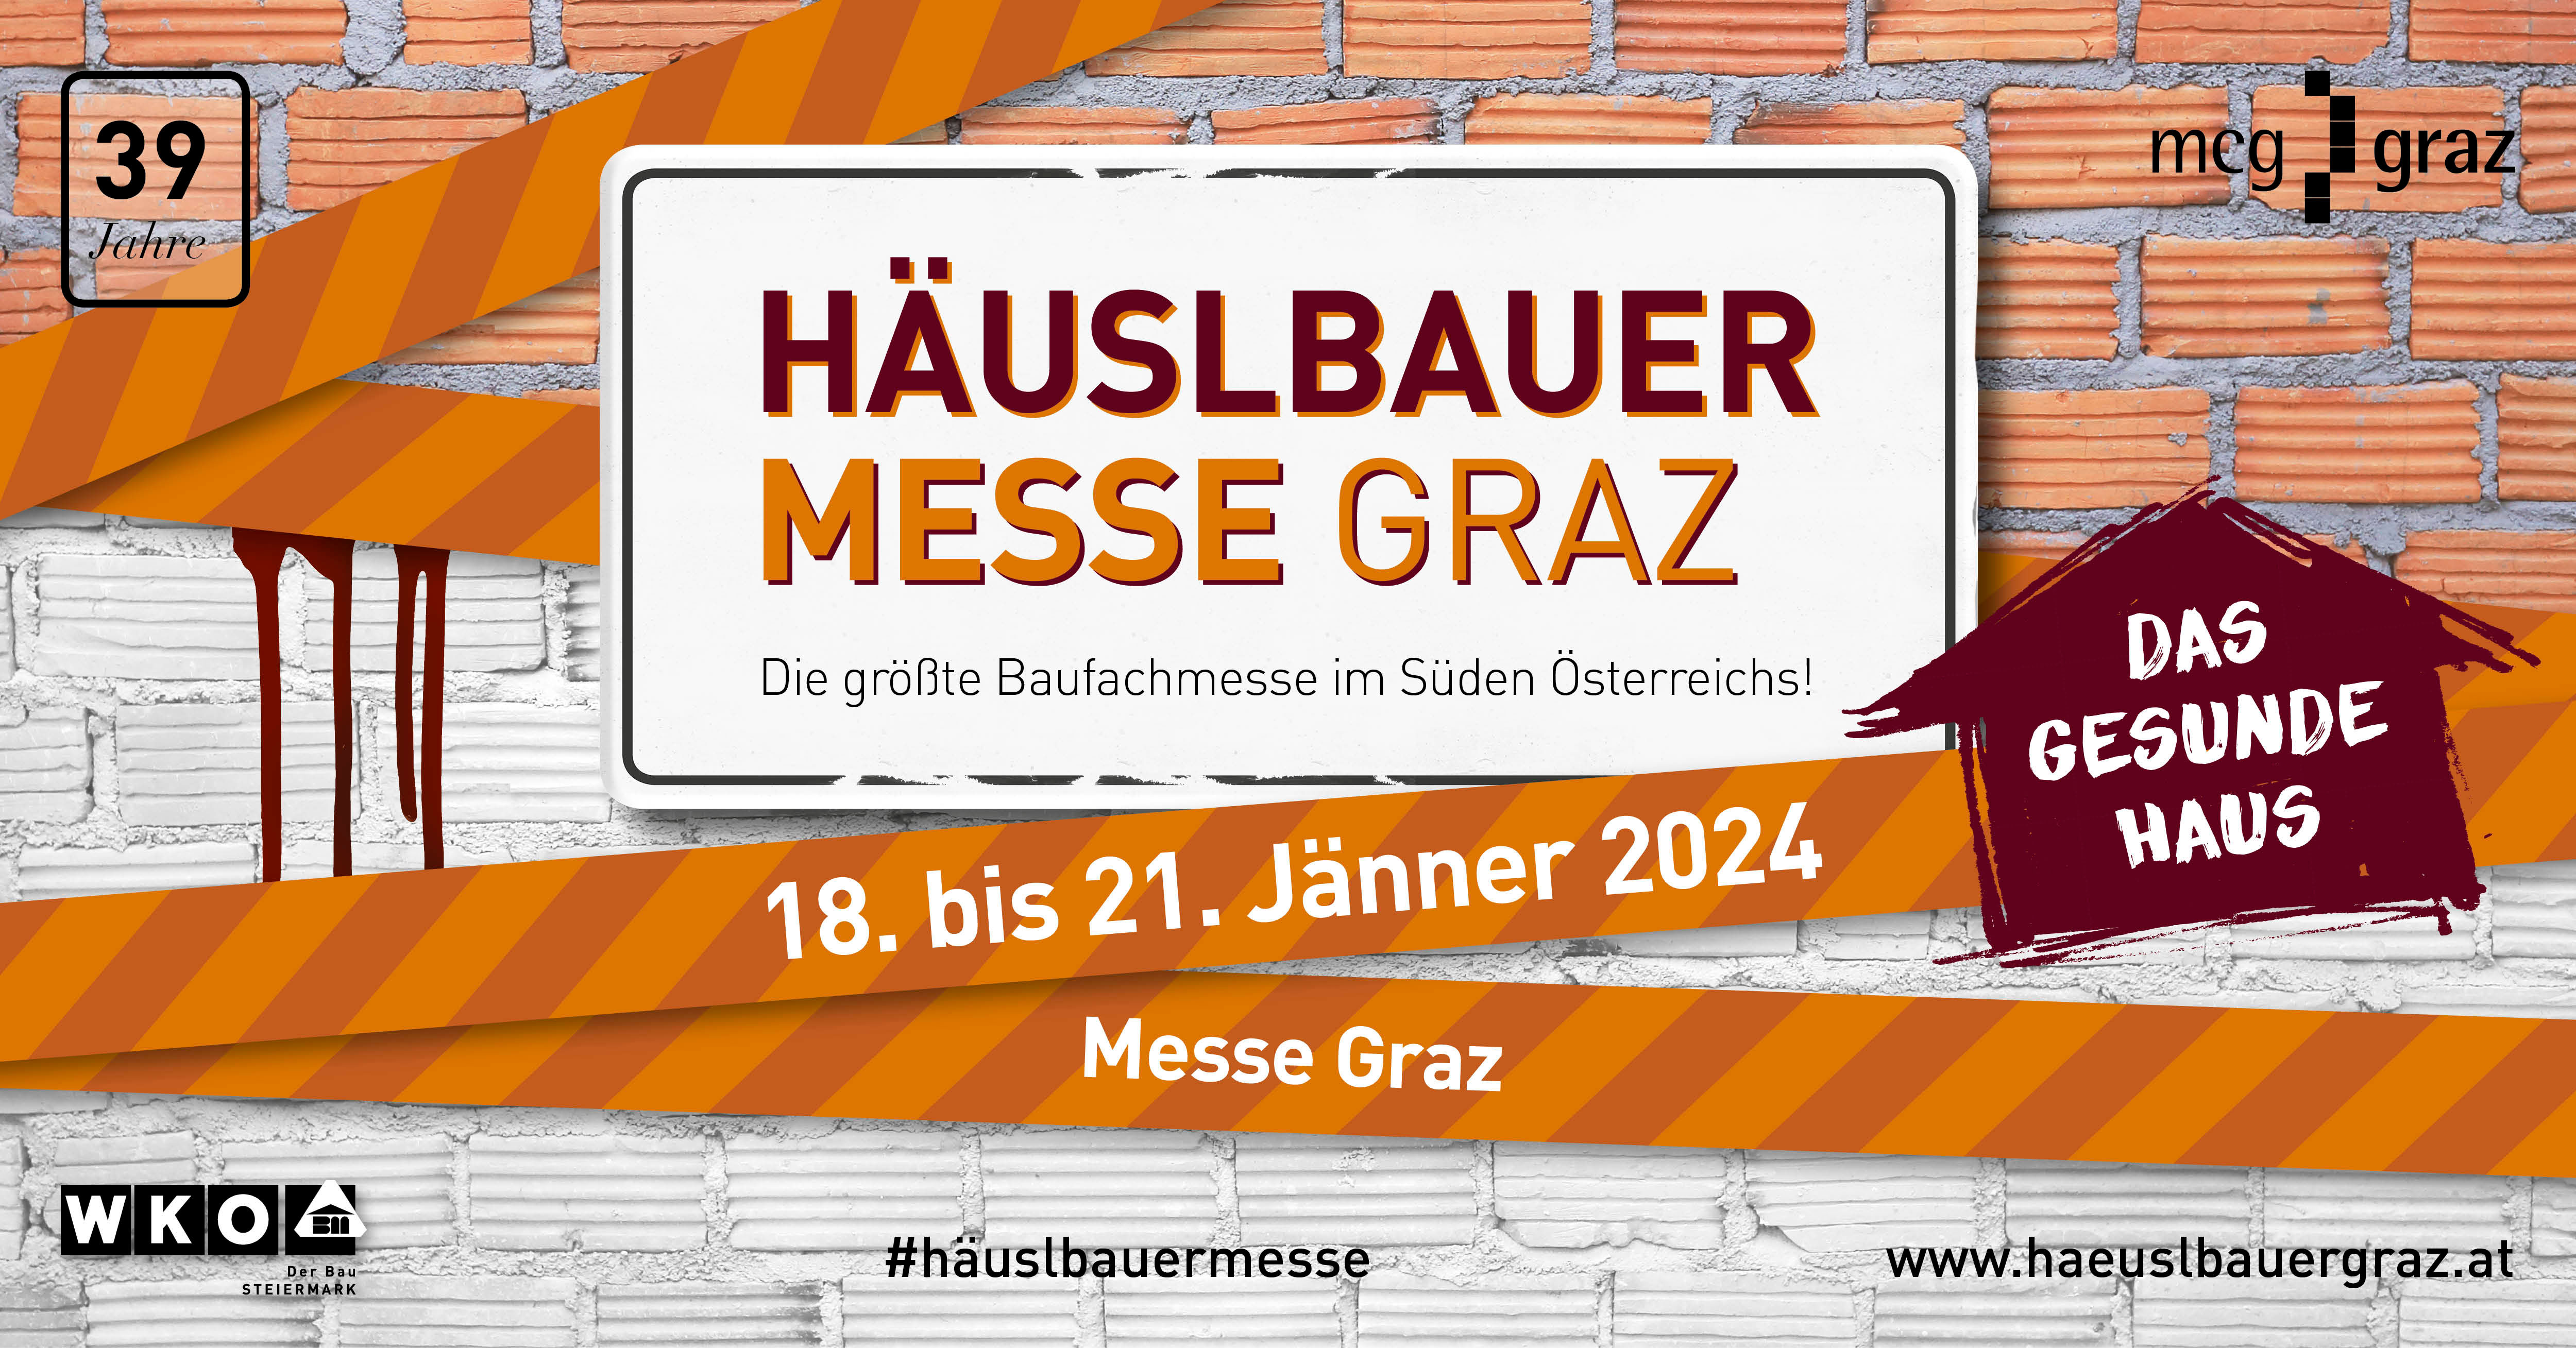 Häuslbauermesse Graz, 18.-21. Januar 2024